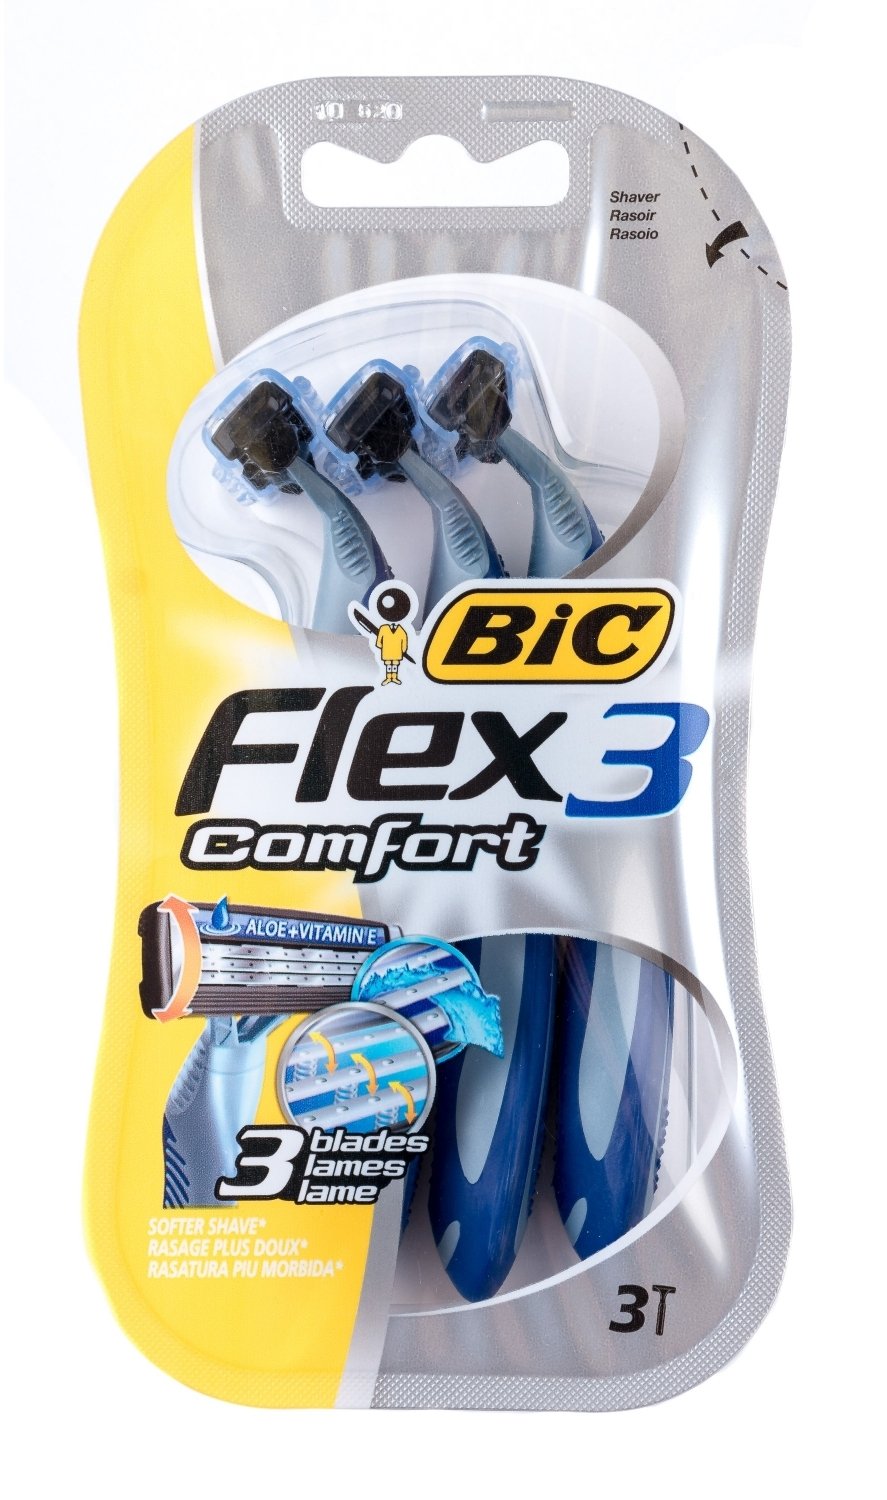 Bic flex 3 comfort